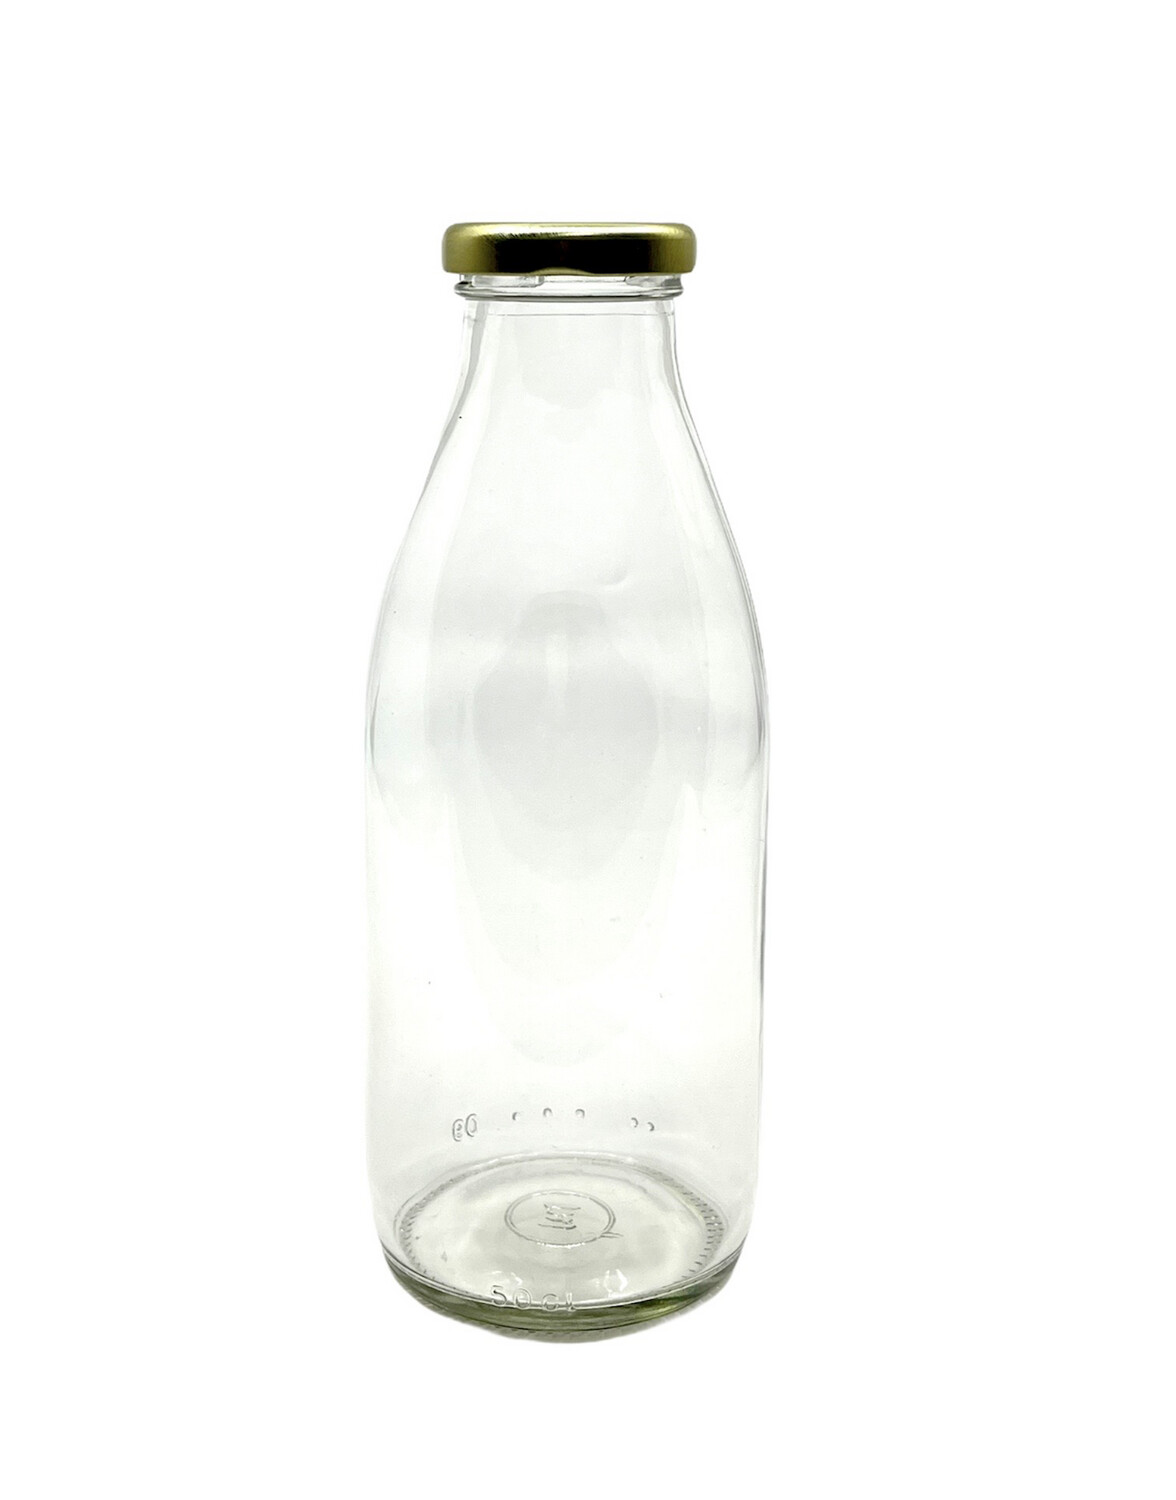 500ml Glass Beverage Bottle, Metal Lug Cap